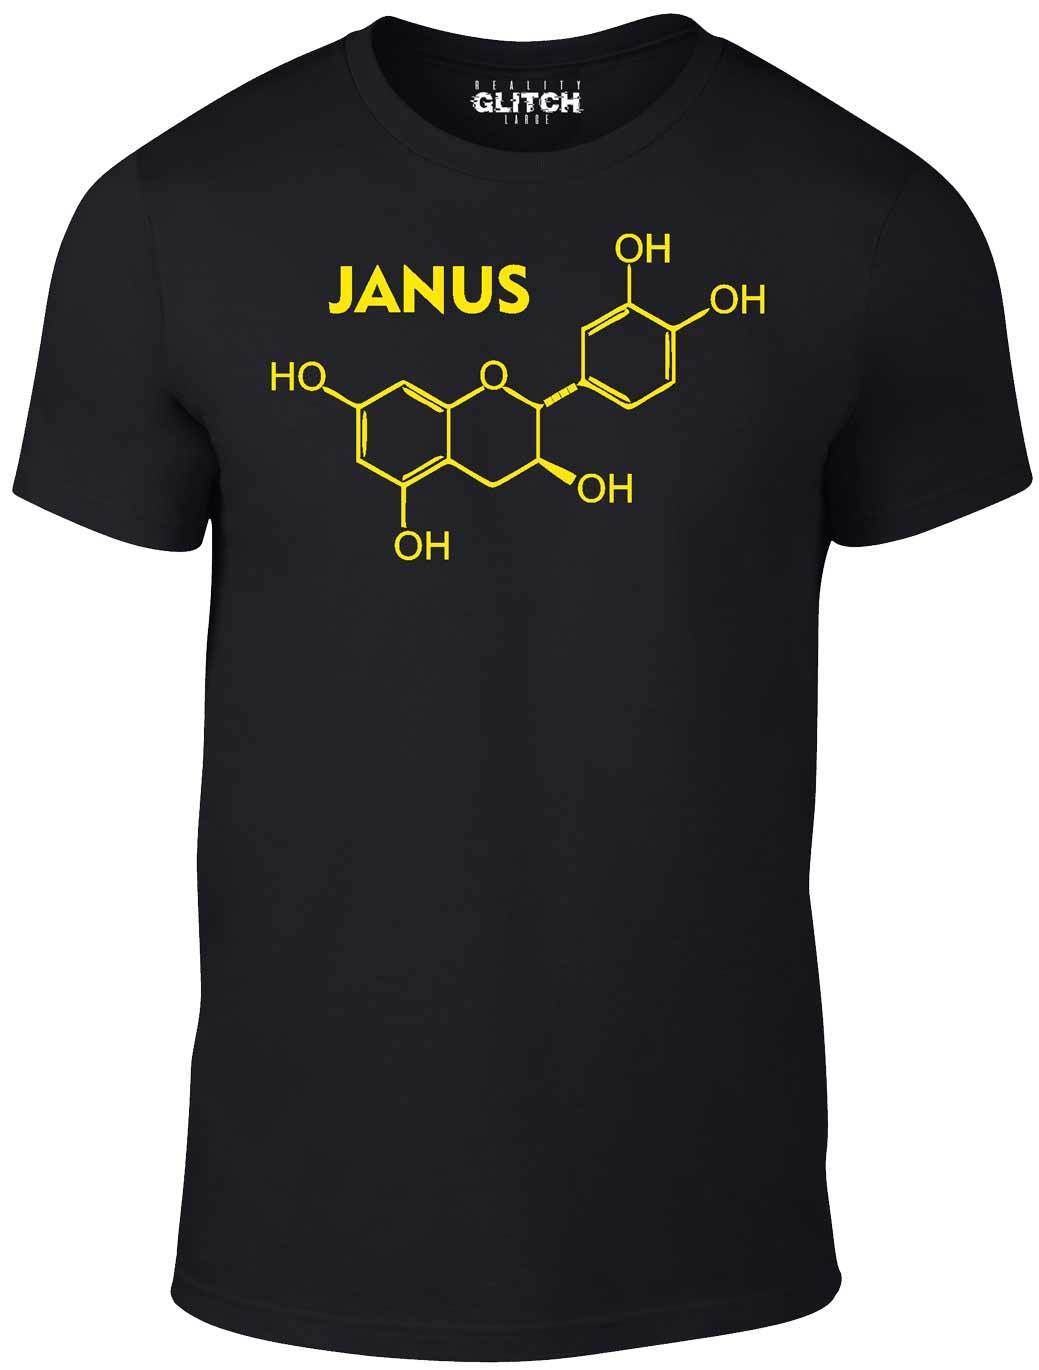 Men's Black T-Shirt With a Janus Molecule Printed Design